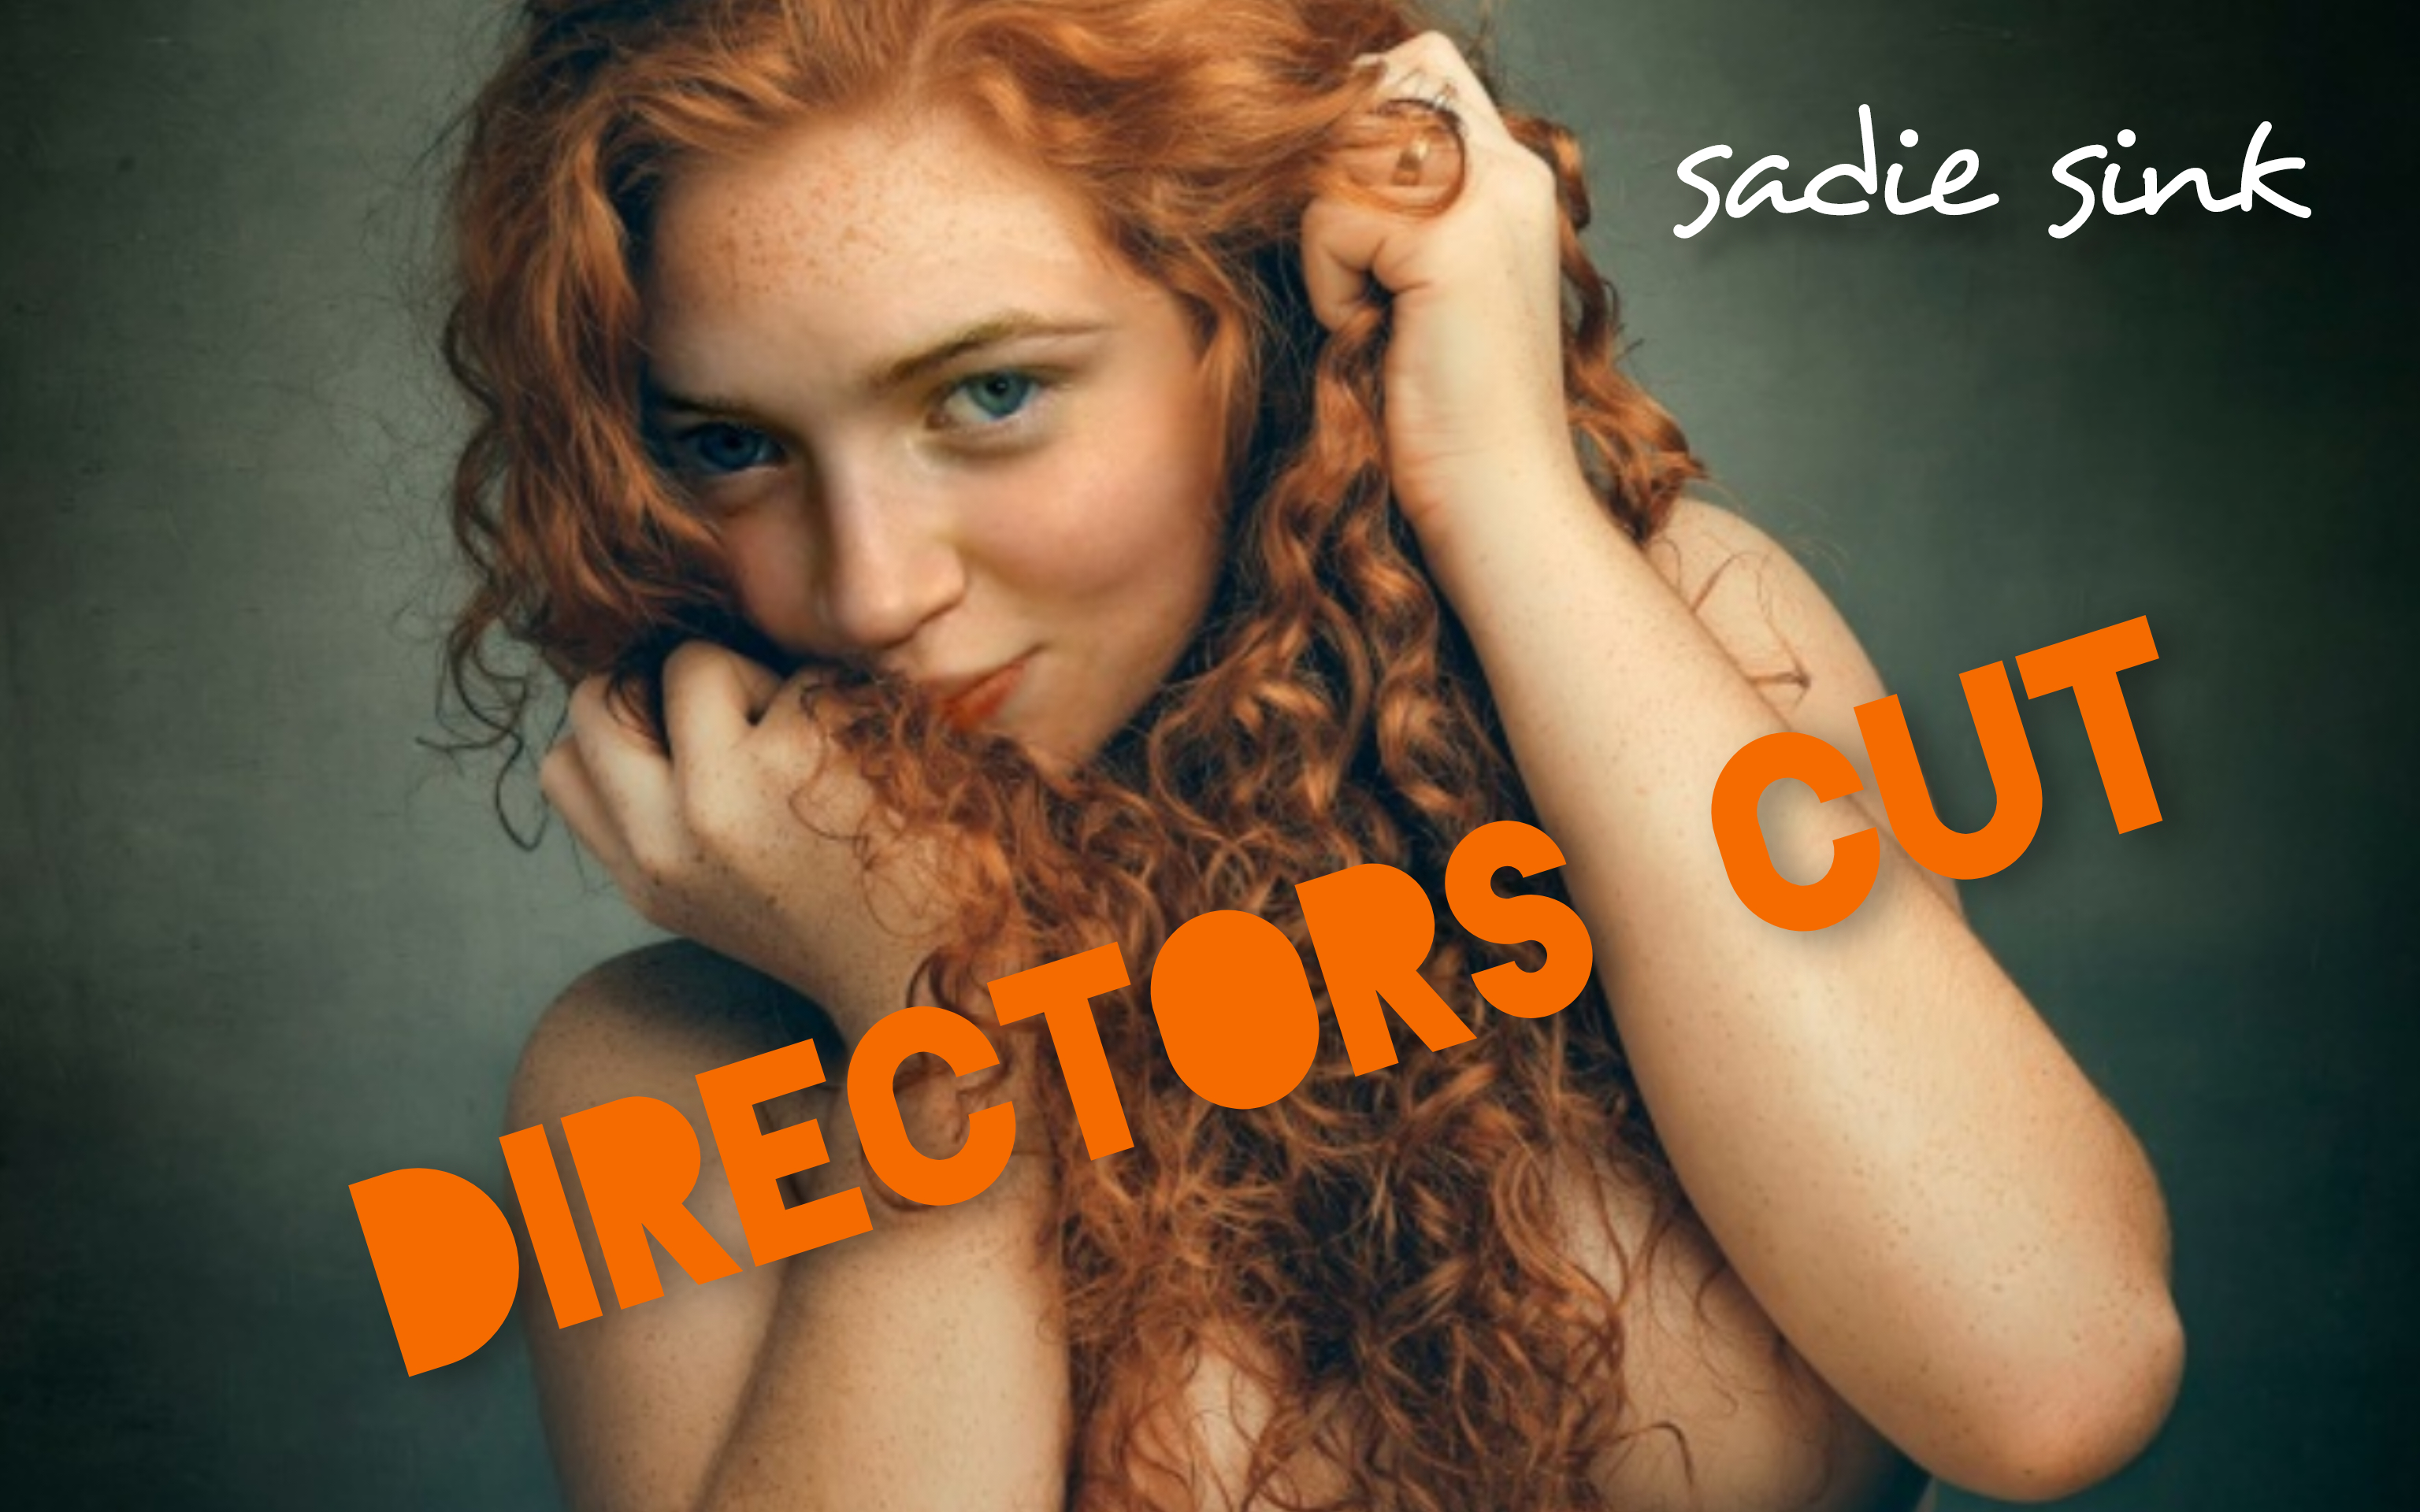 NOT Sadie Sink Deep Fake 2 - DIRECTOR'S CUT PARODY